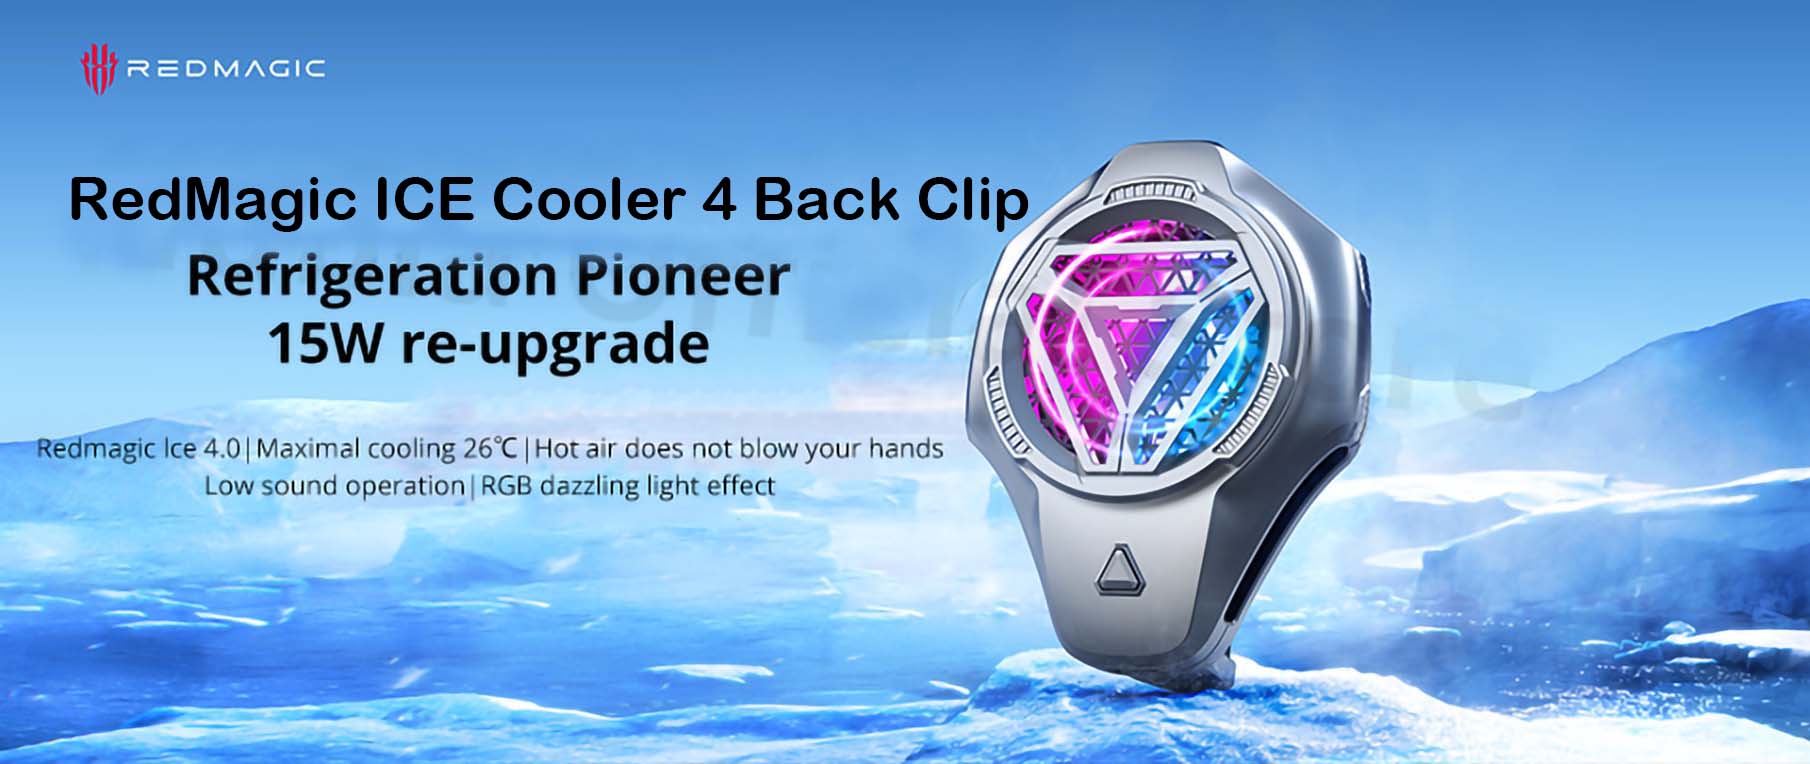 RedMagic ICE Cooler 4 Back Clip